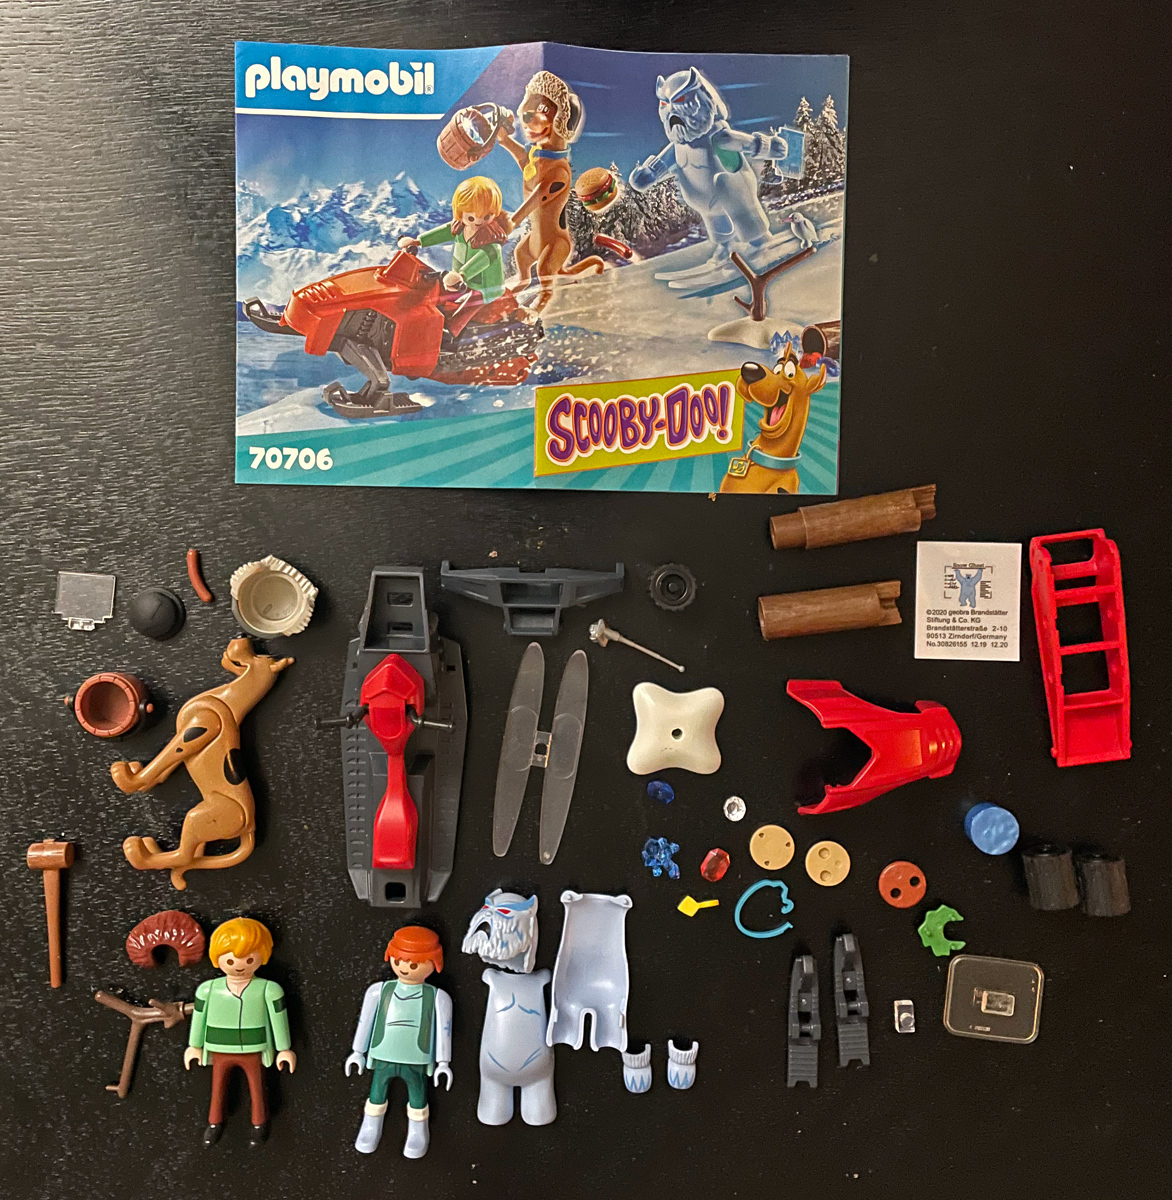 Playmobil Scooby-Doo Capitaine Cutler, Playmobil